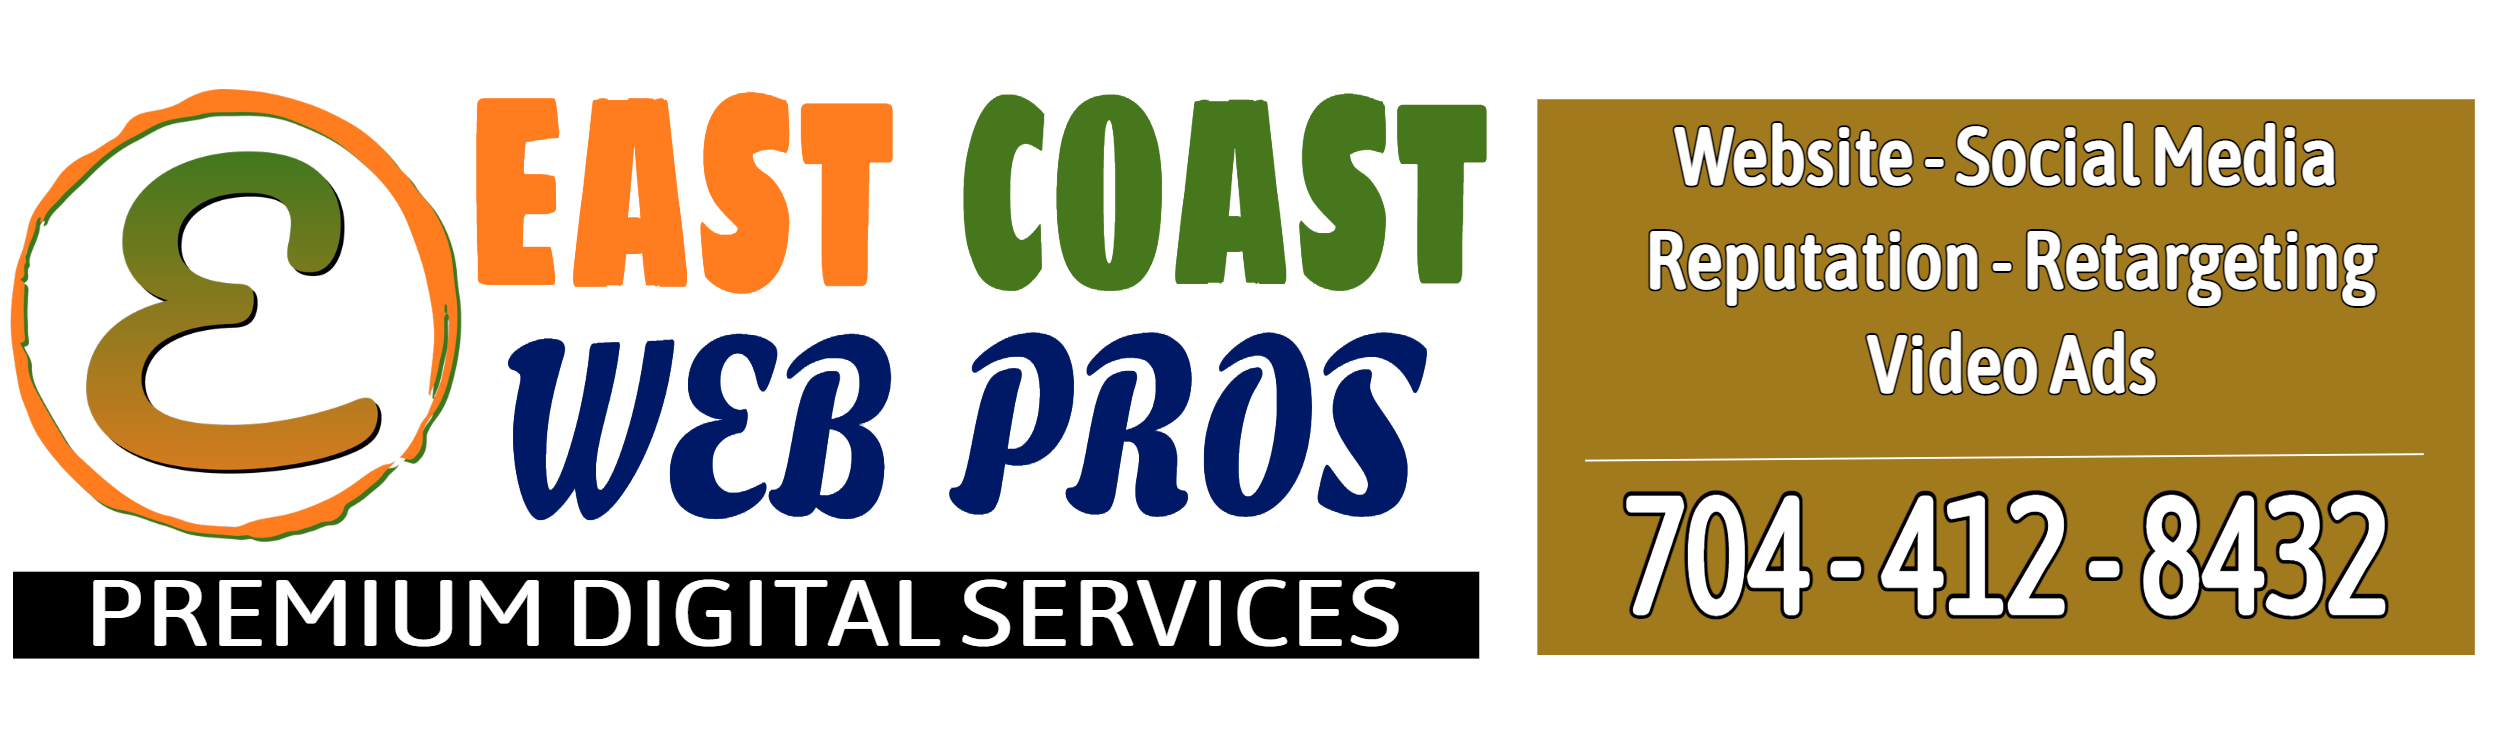 East Coast Web Pros